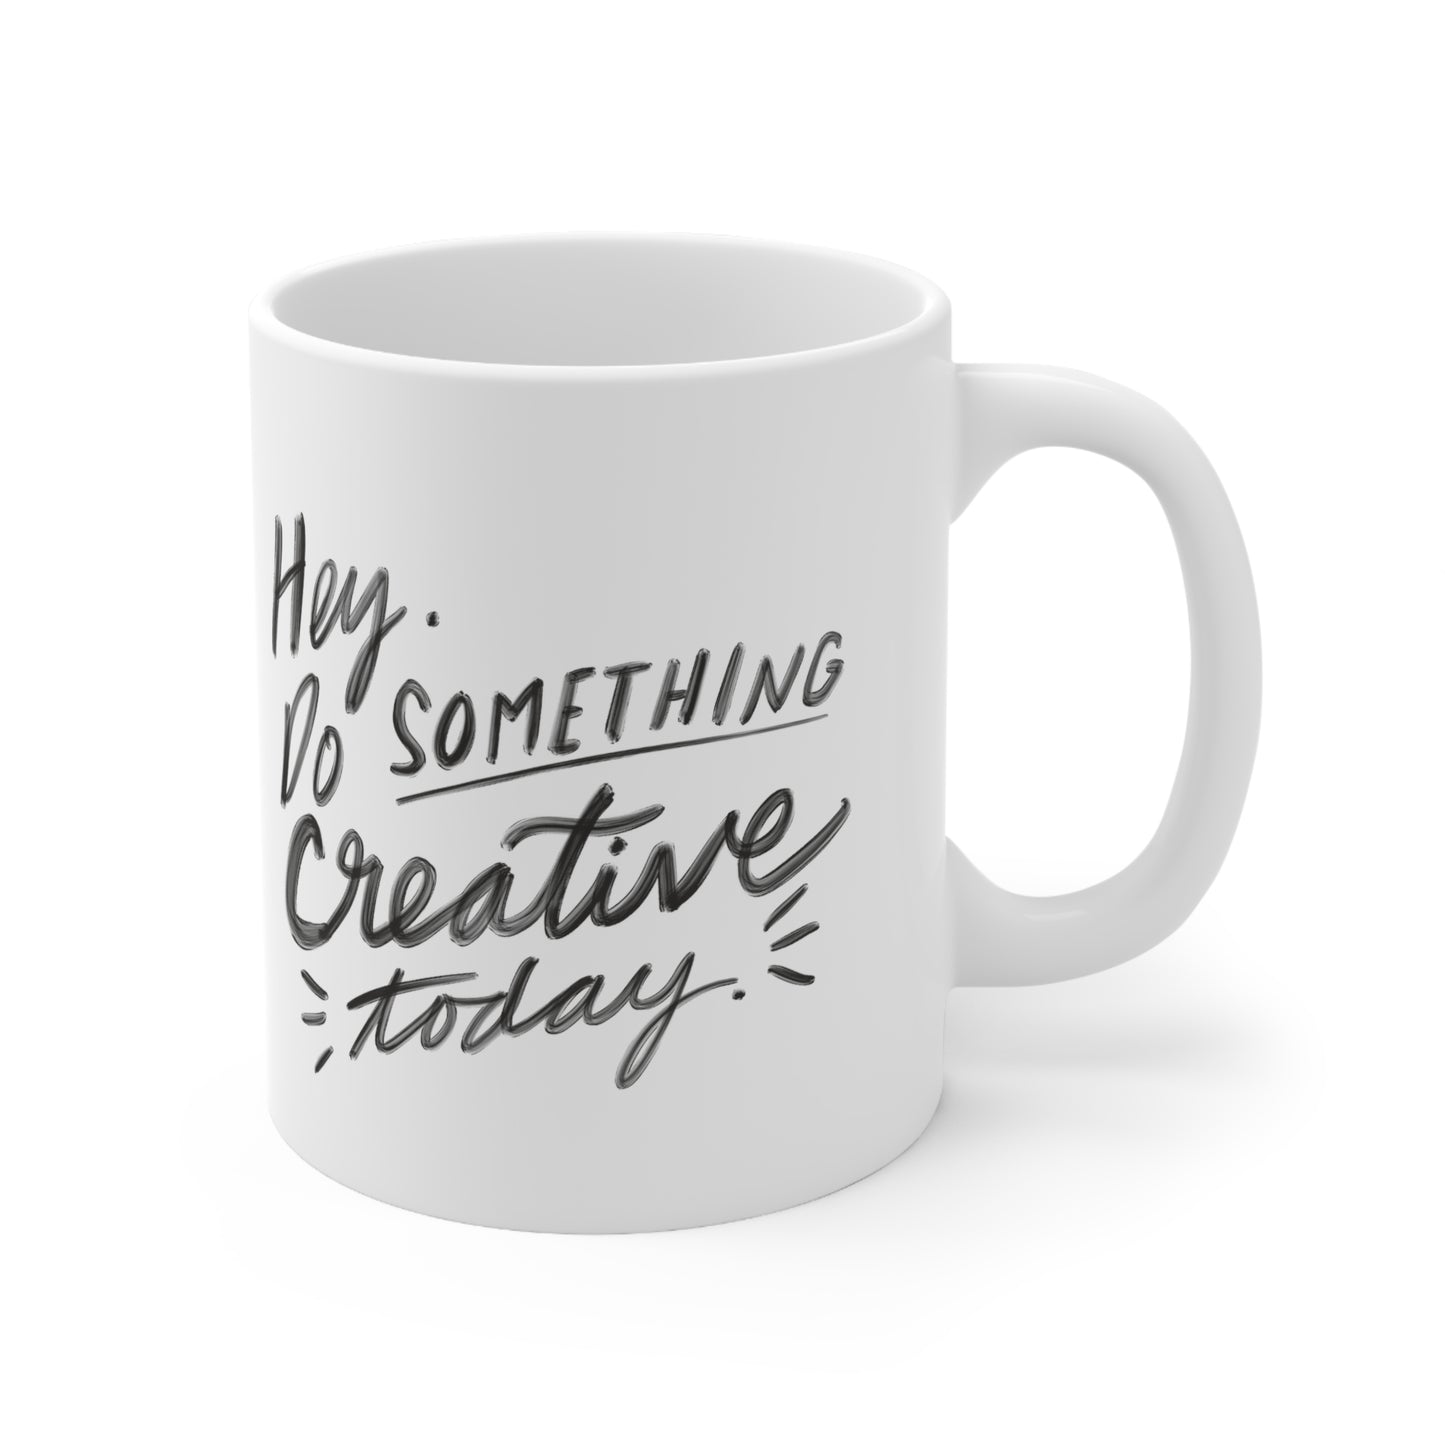 Creative Hand-lettered Ceramic Mug 11oz - by Christy Beasley